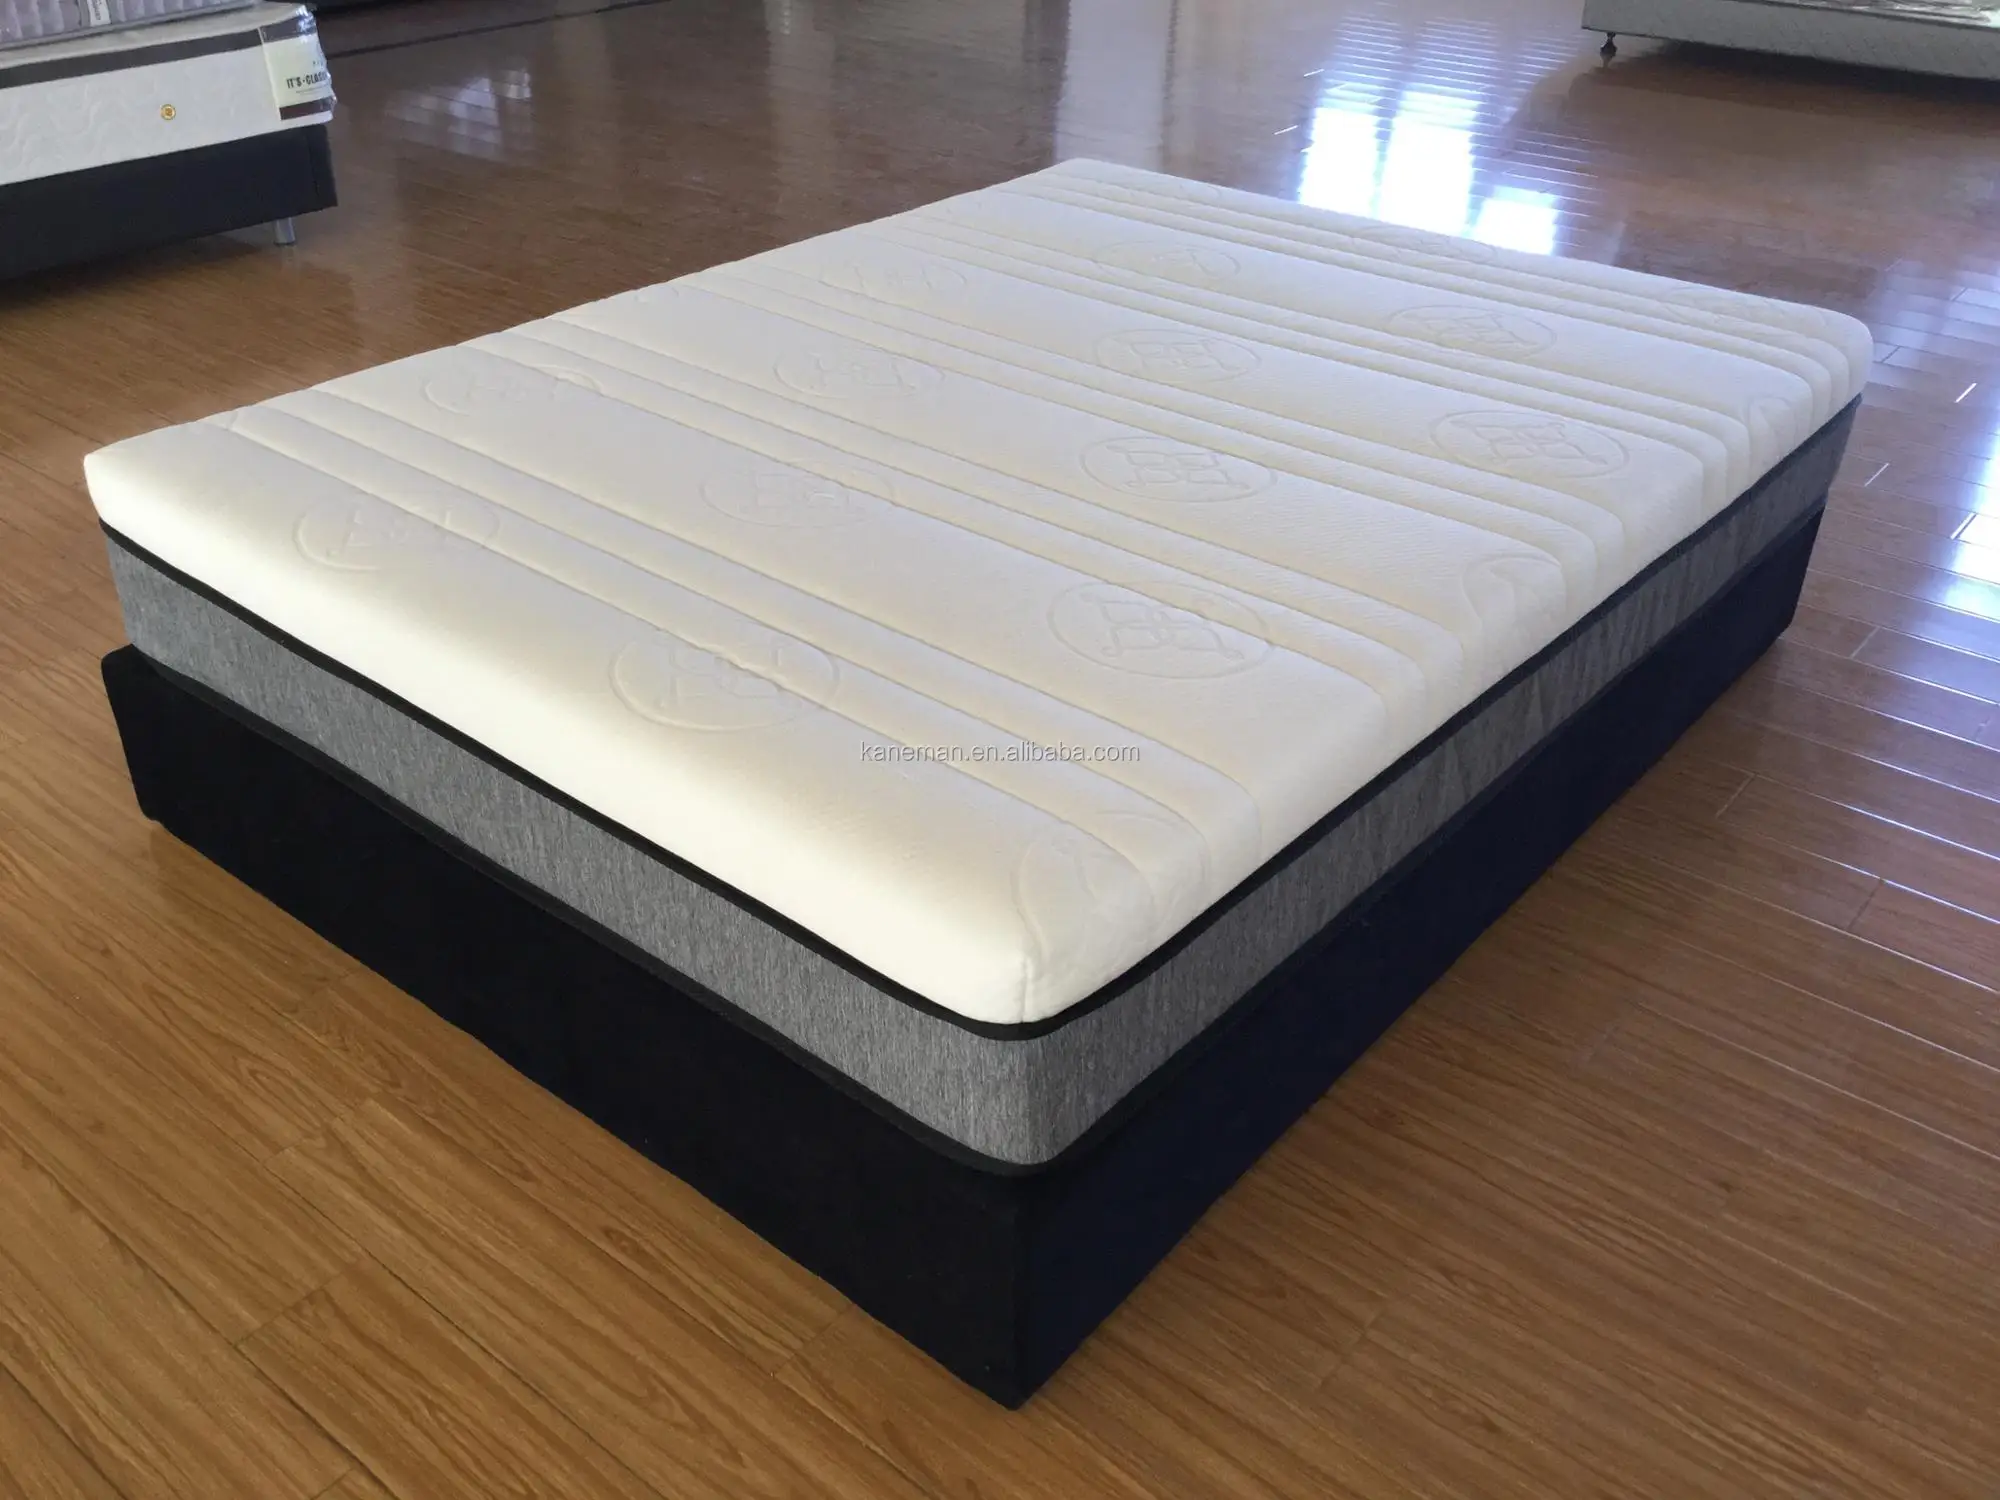 latex foam mattress in a box